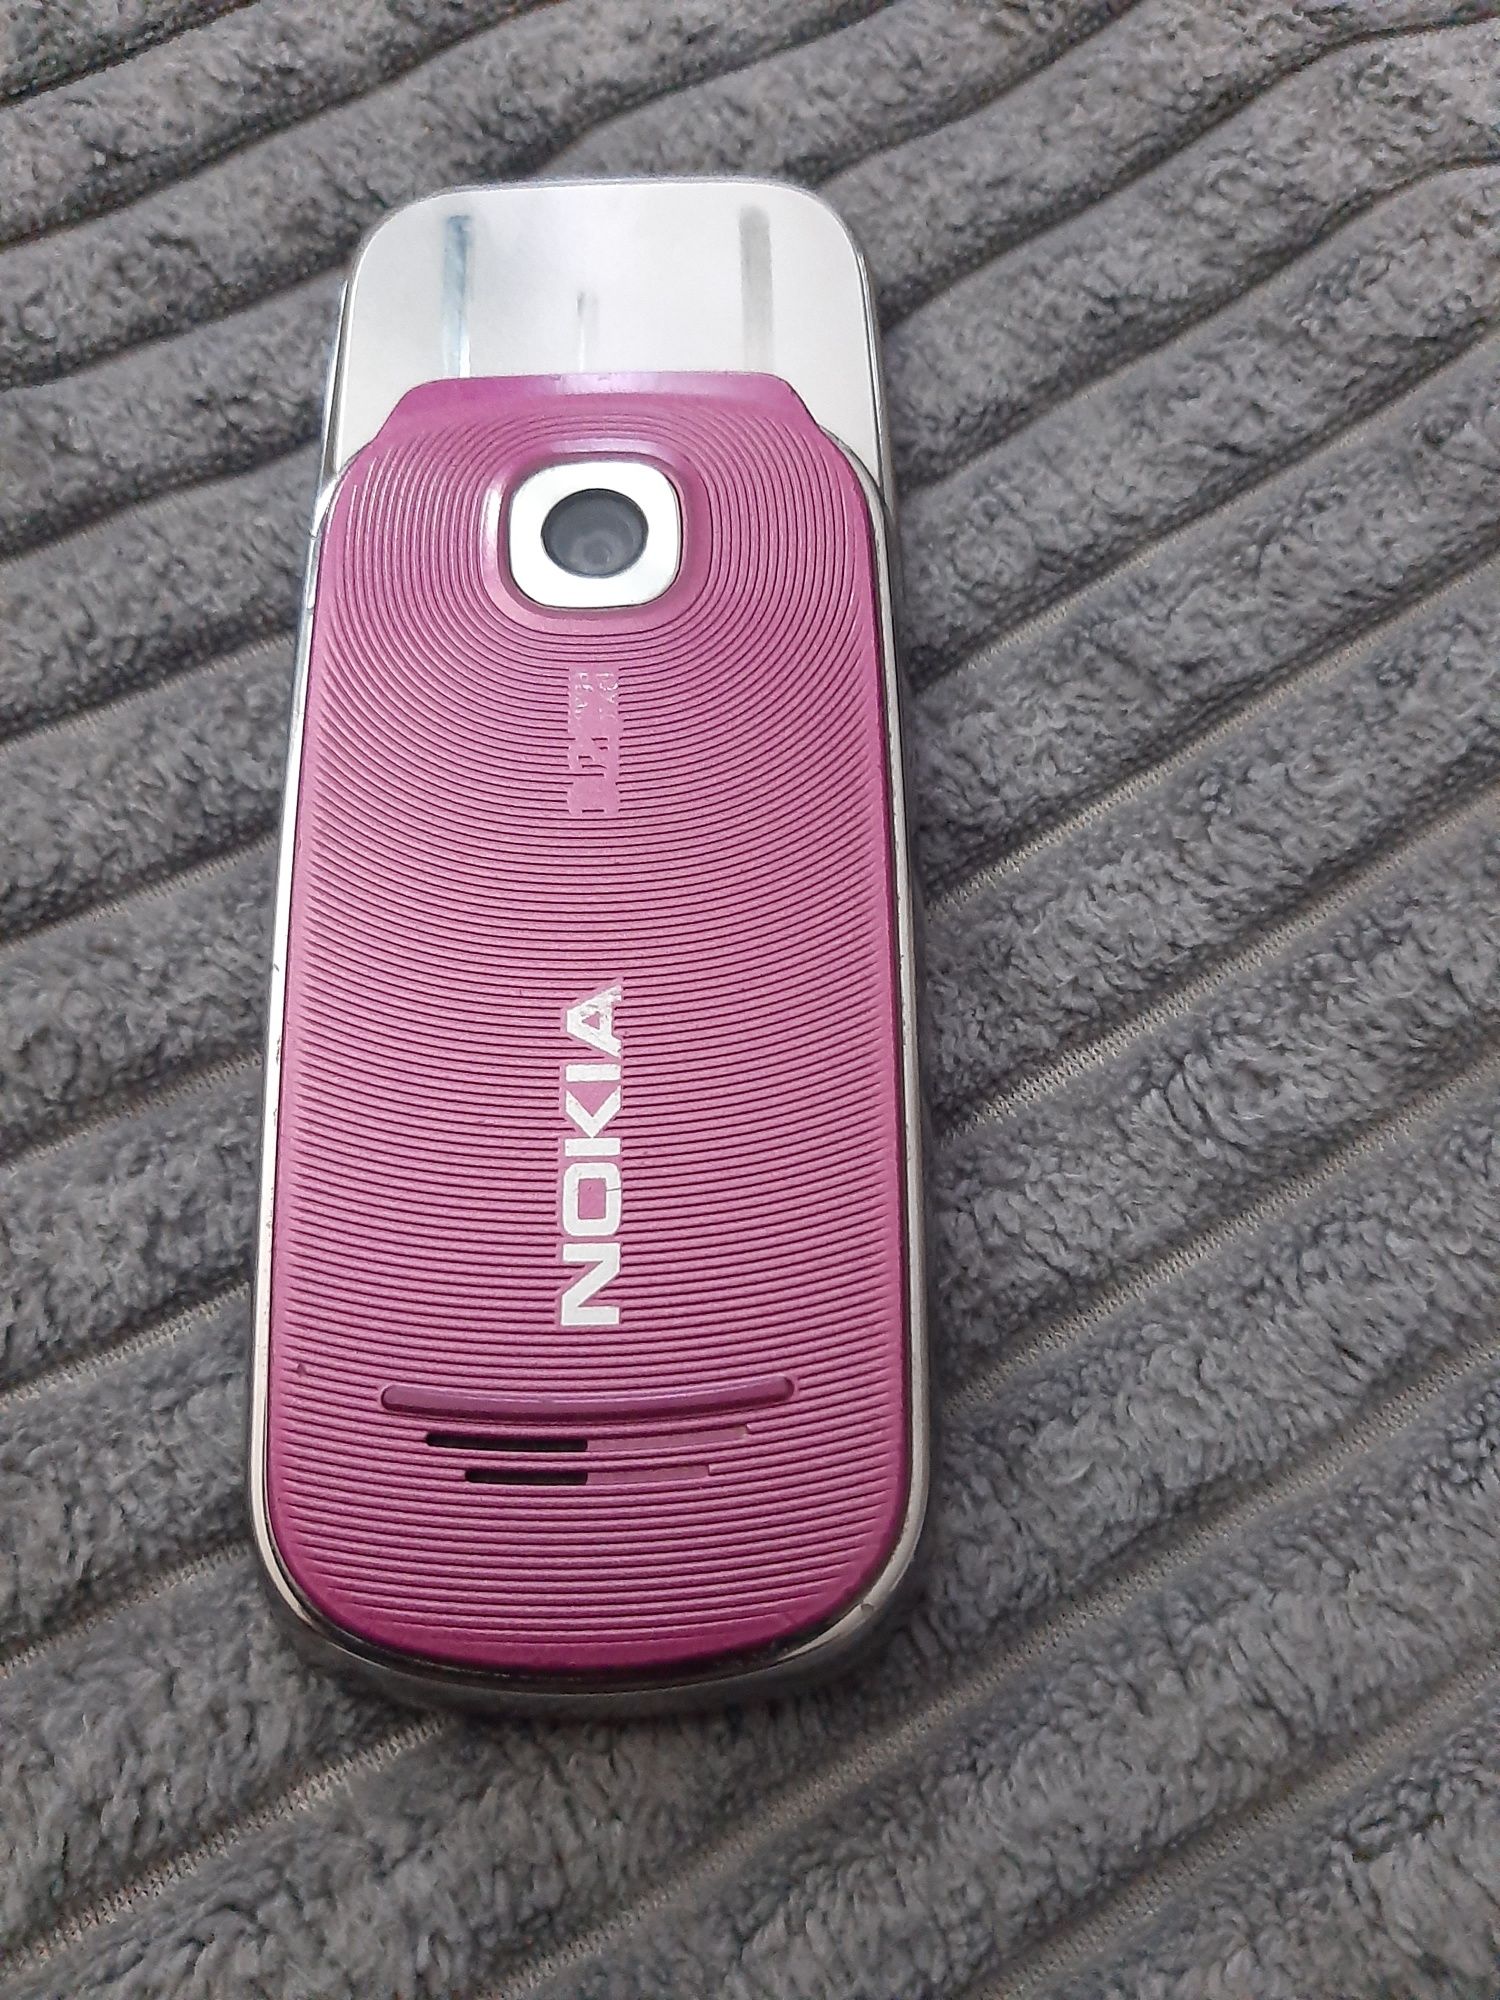 Vand Nokia 7230 functioneaza perfect